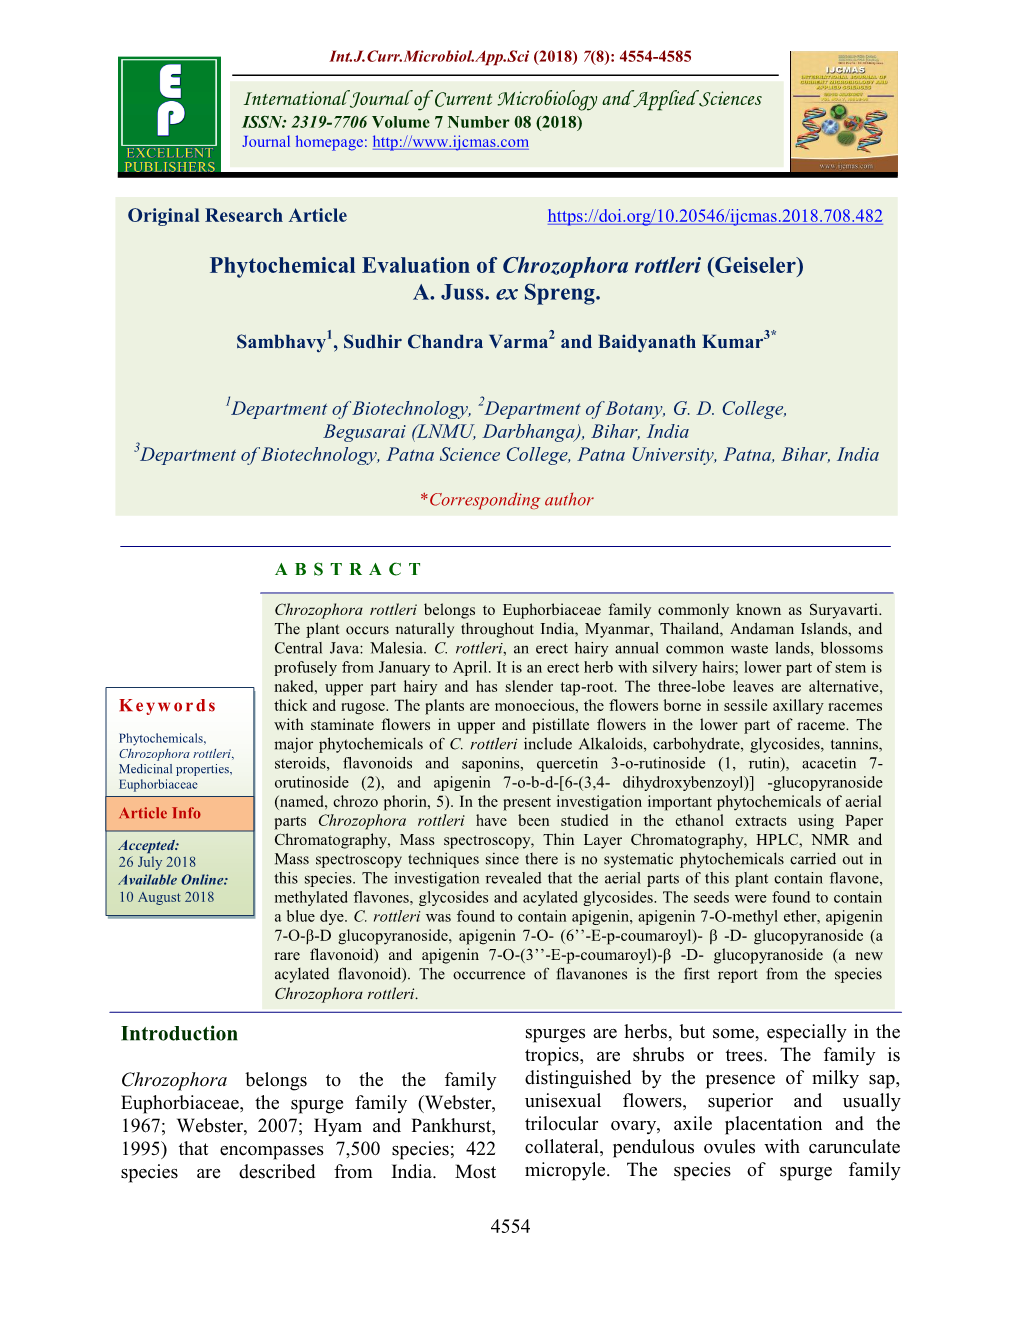 Phytochemical Evaluation of Chrozophora Rottleri (Geiseler) A